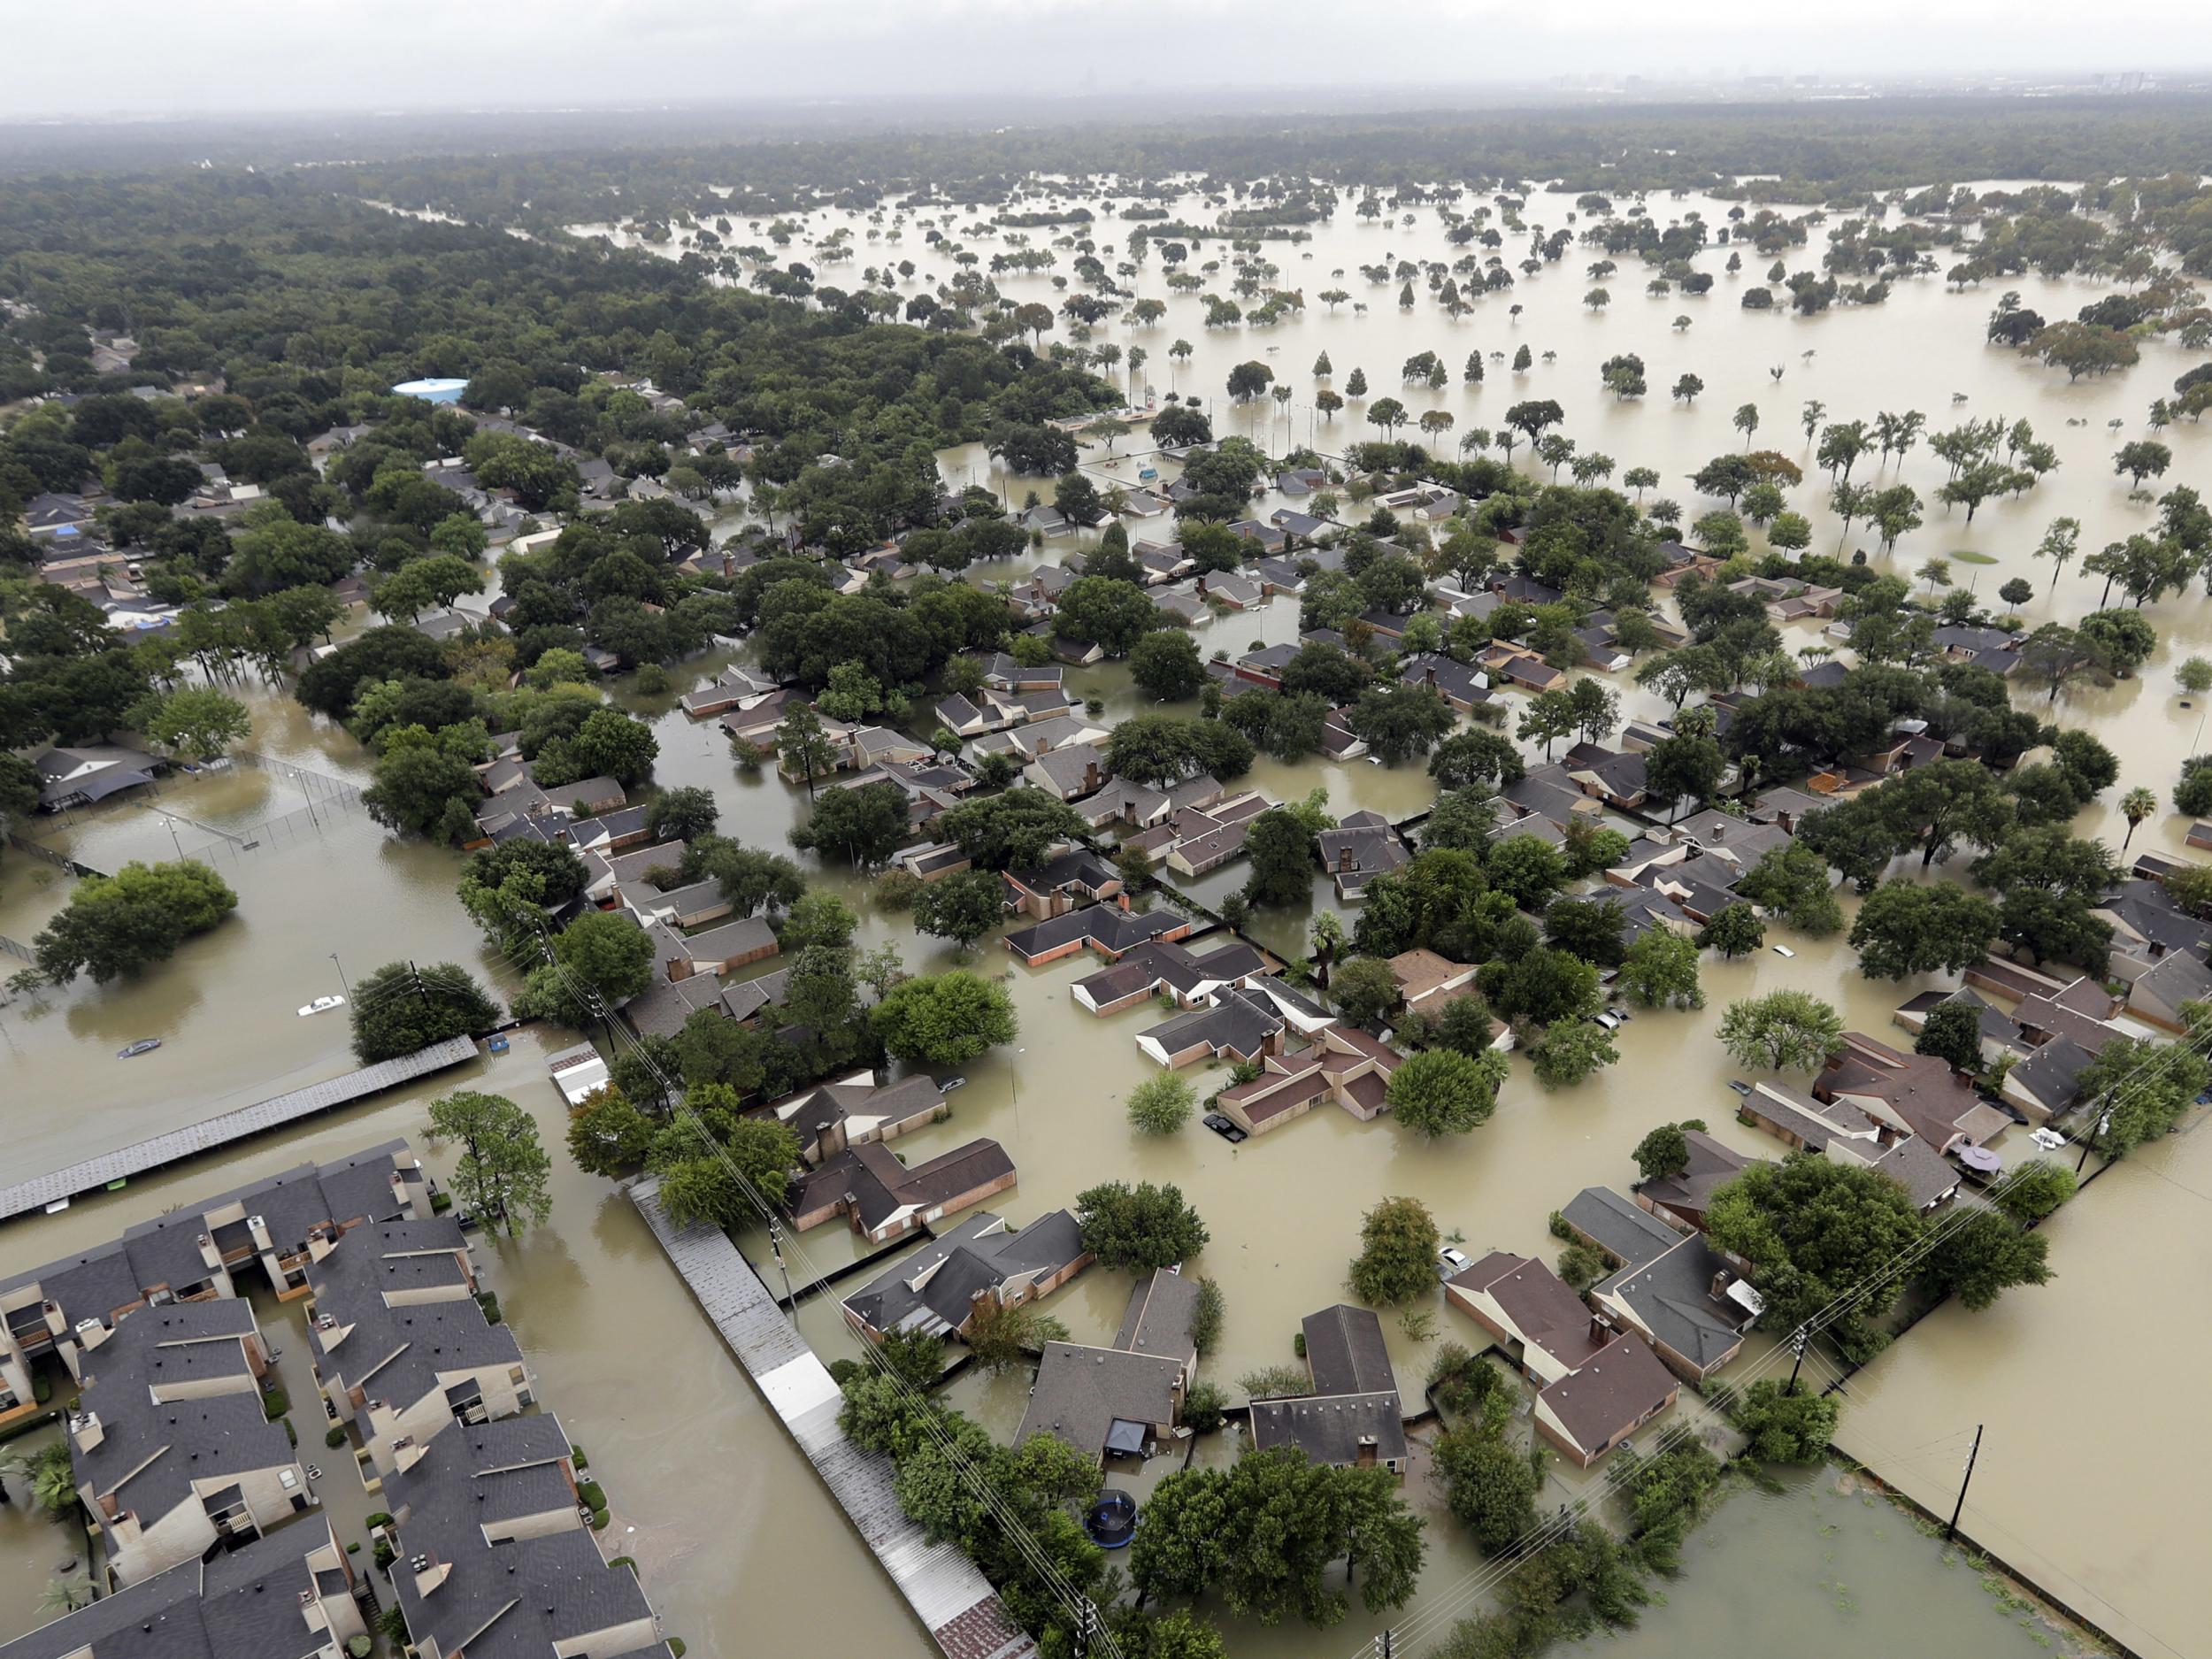 Hurricane Harvey Houston devastation caught in extraordinary aerial